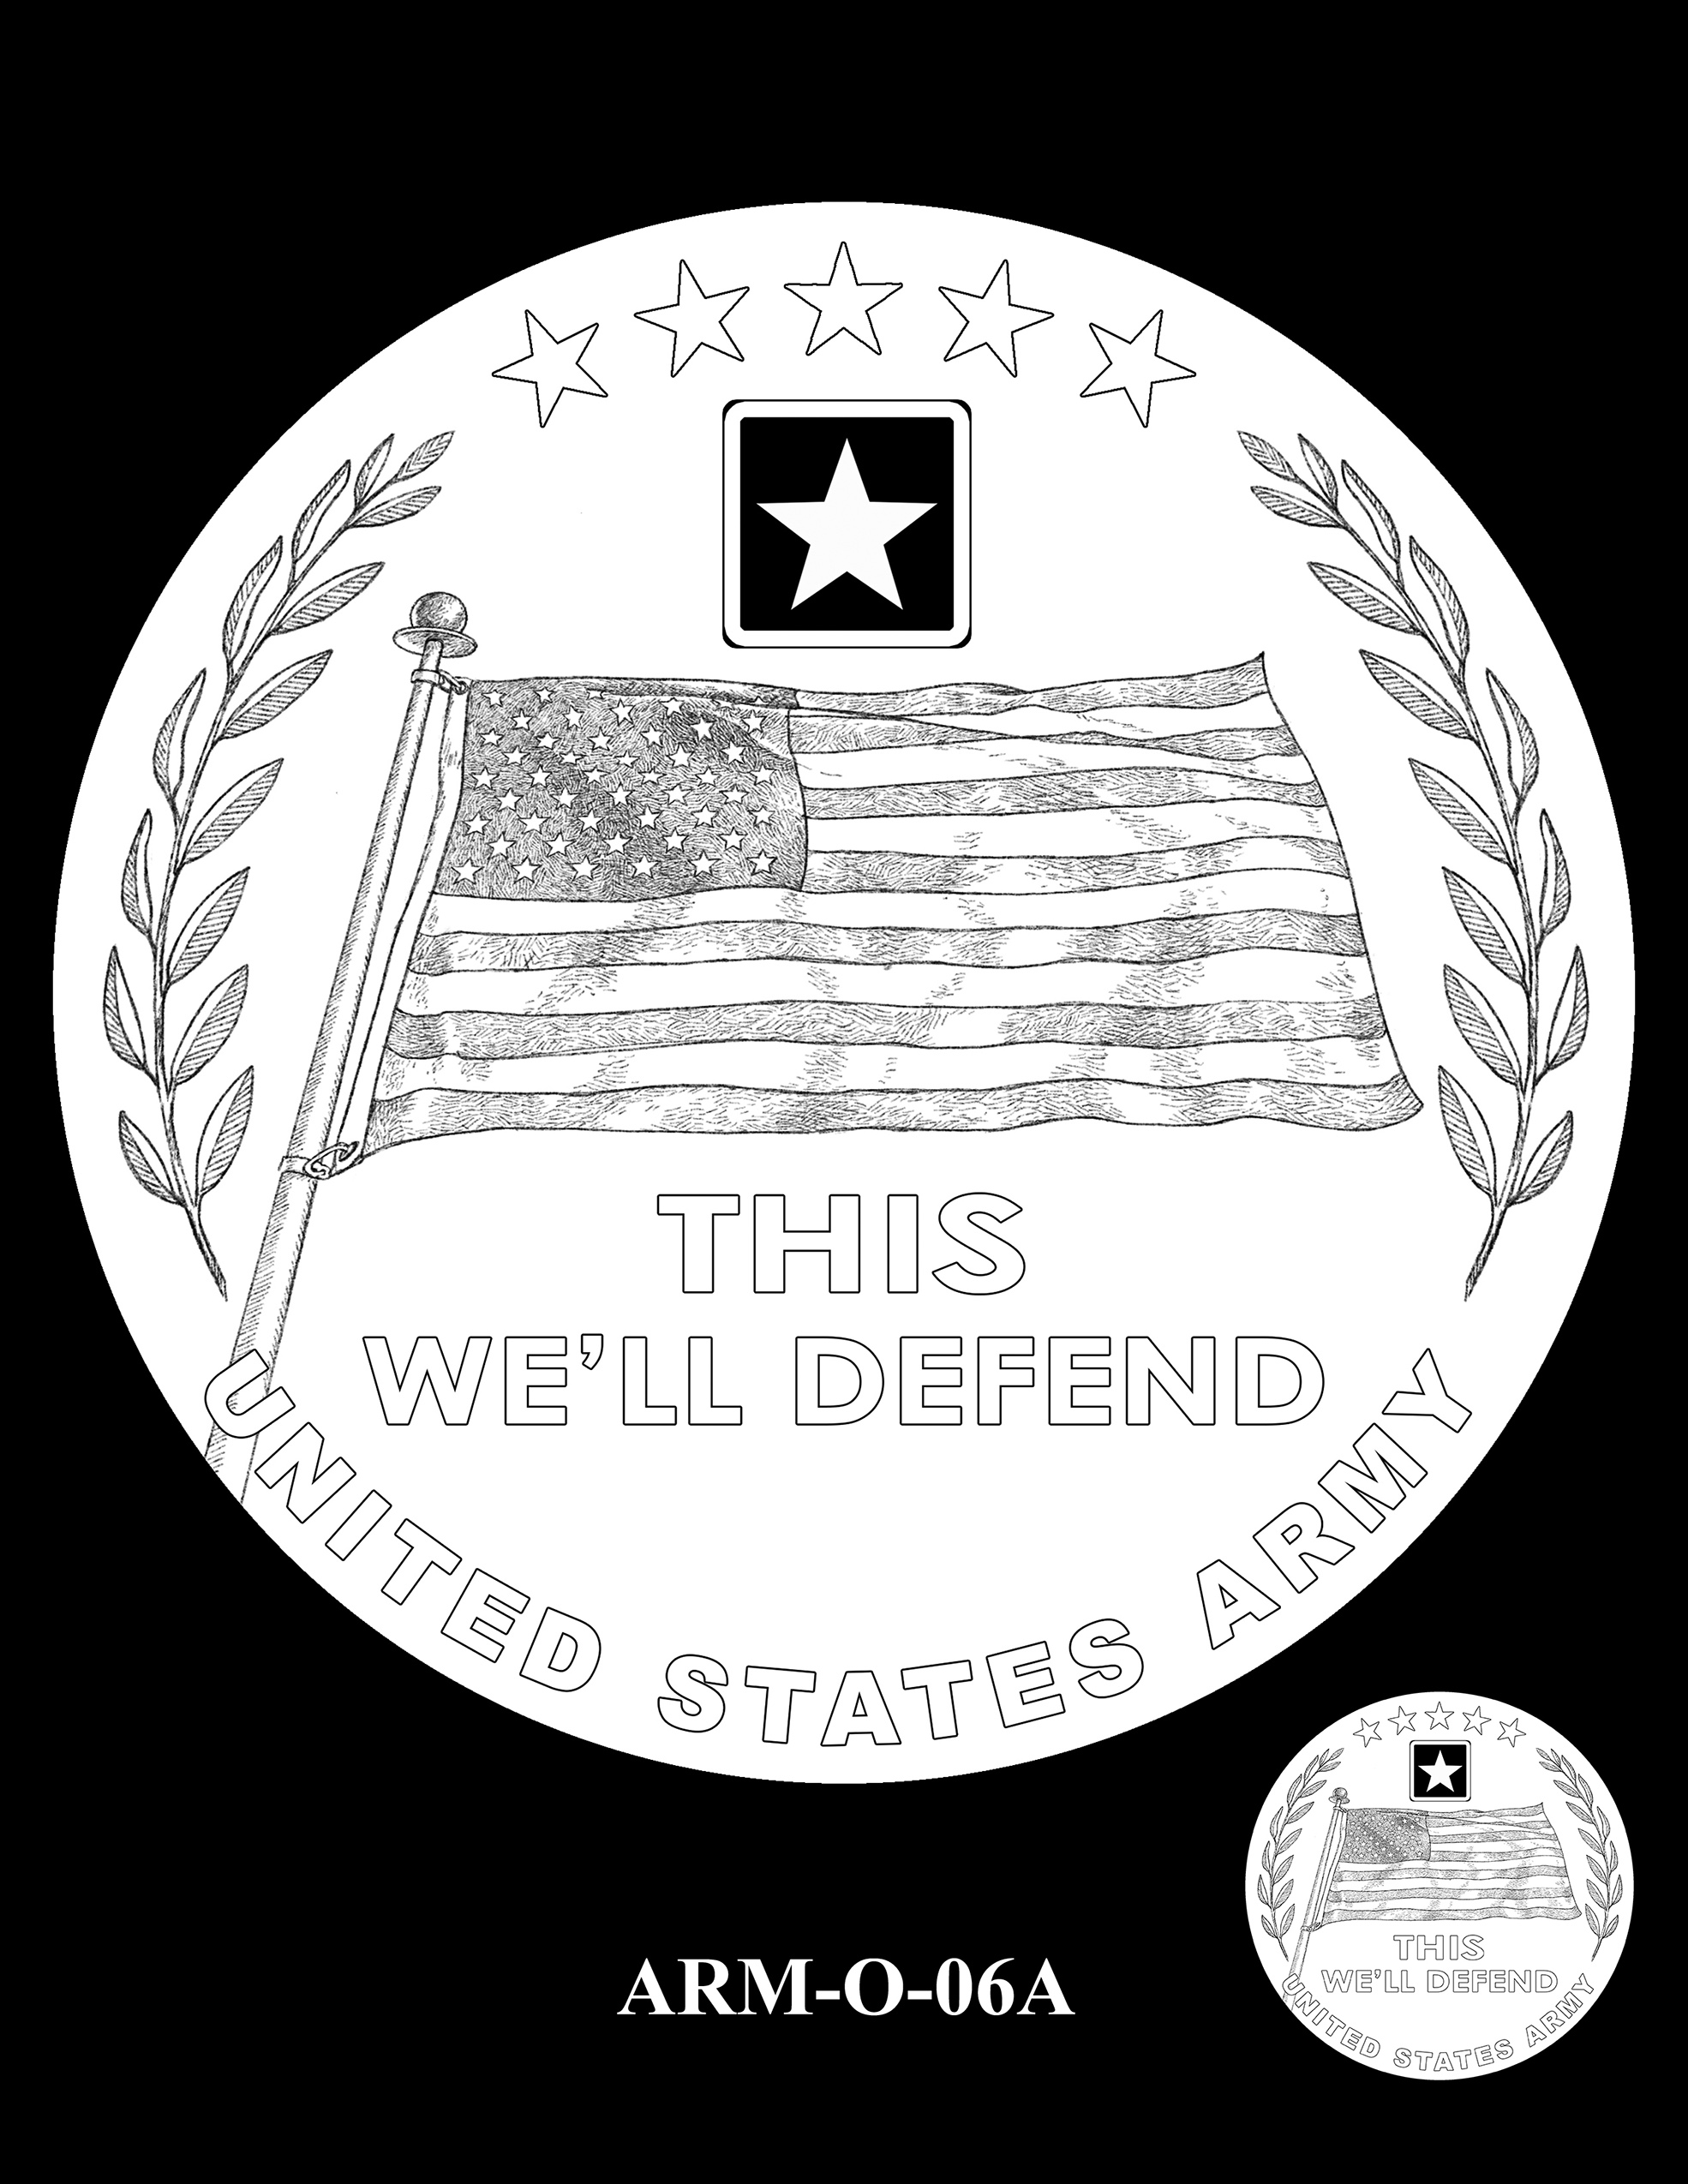 ARM-O-06A -- United States Army Silver Medal